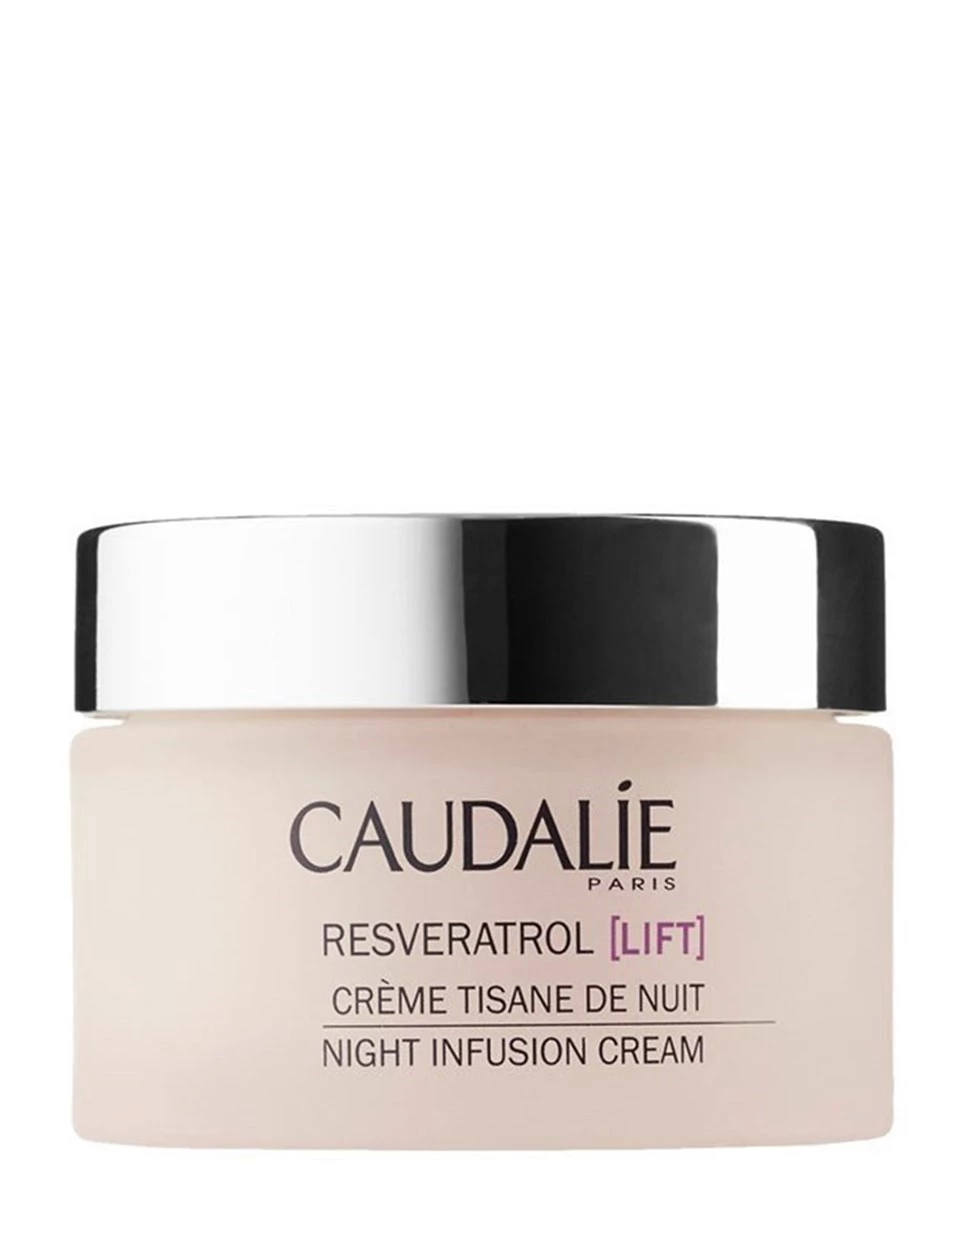 Caudalie Resveratrol Lift Night Infusion Cream 50ml